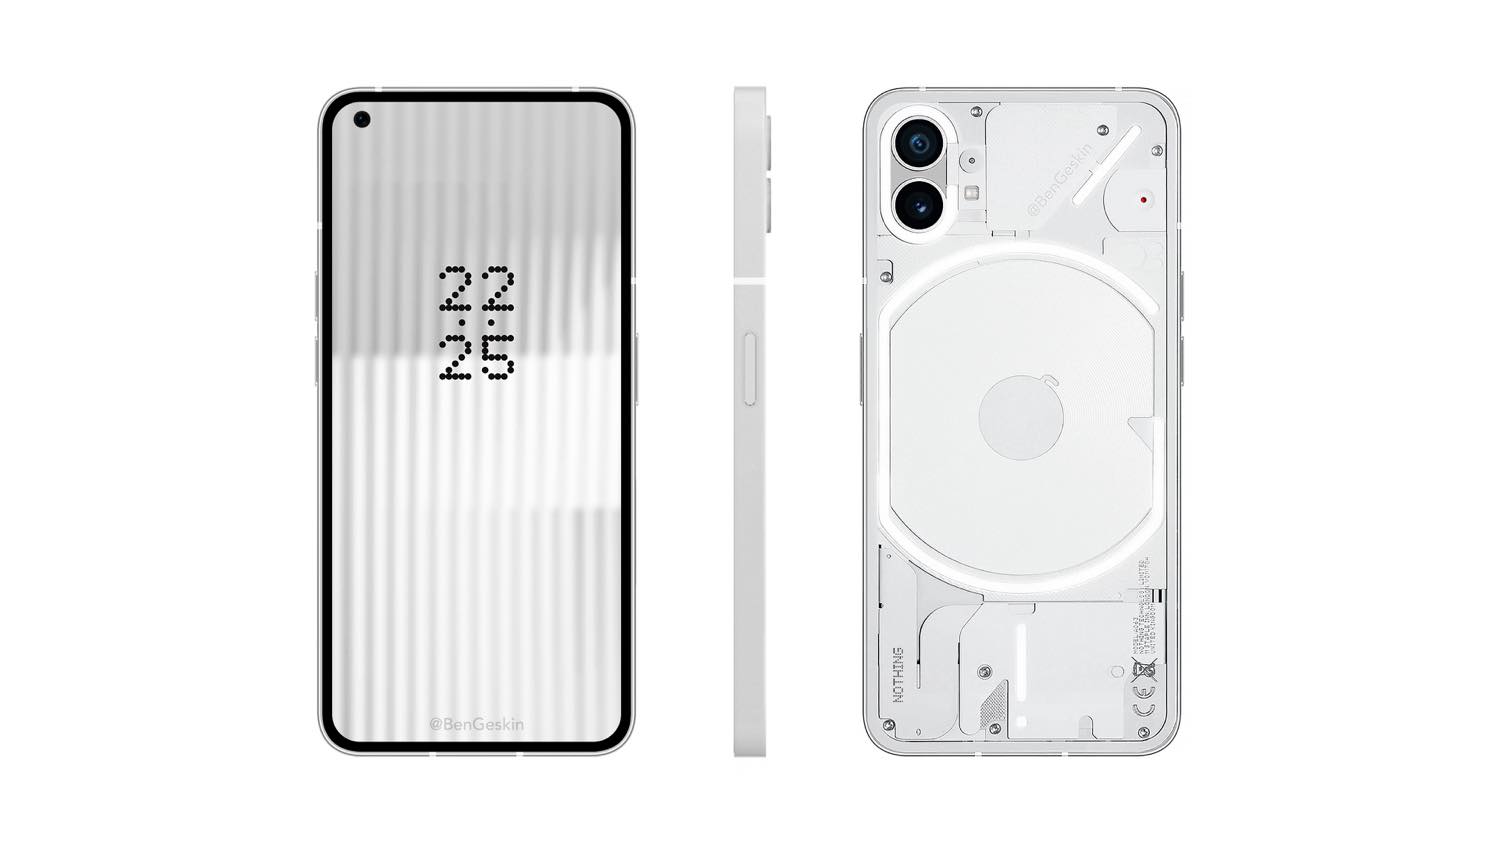 Nothing、半透明でLEDが光るデザインが特徴の｢Nothing Phone (1)｣を正式発表 − 国内では8月に発売予定